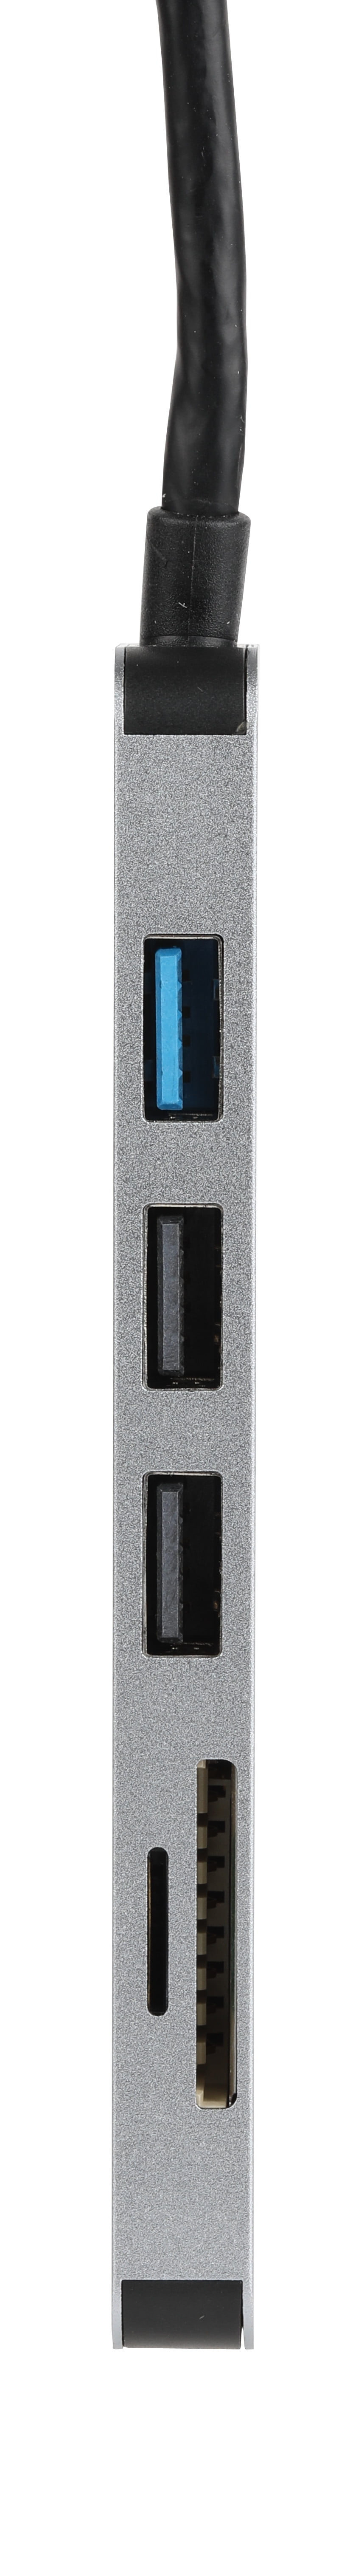 Vivitar Multi-Port USB Hub with SD, Micro SD and Compact Flash Card Reader  